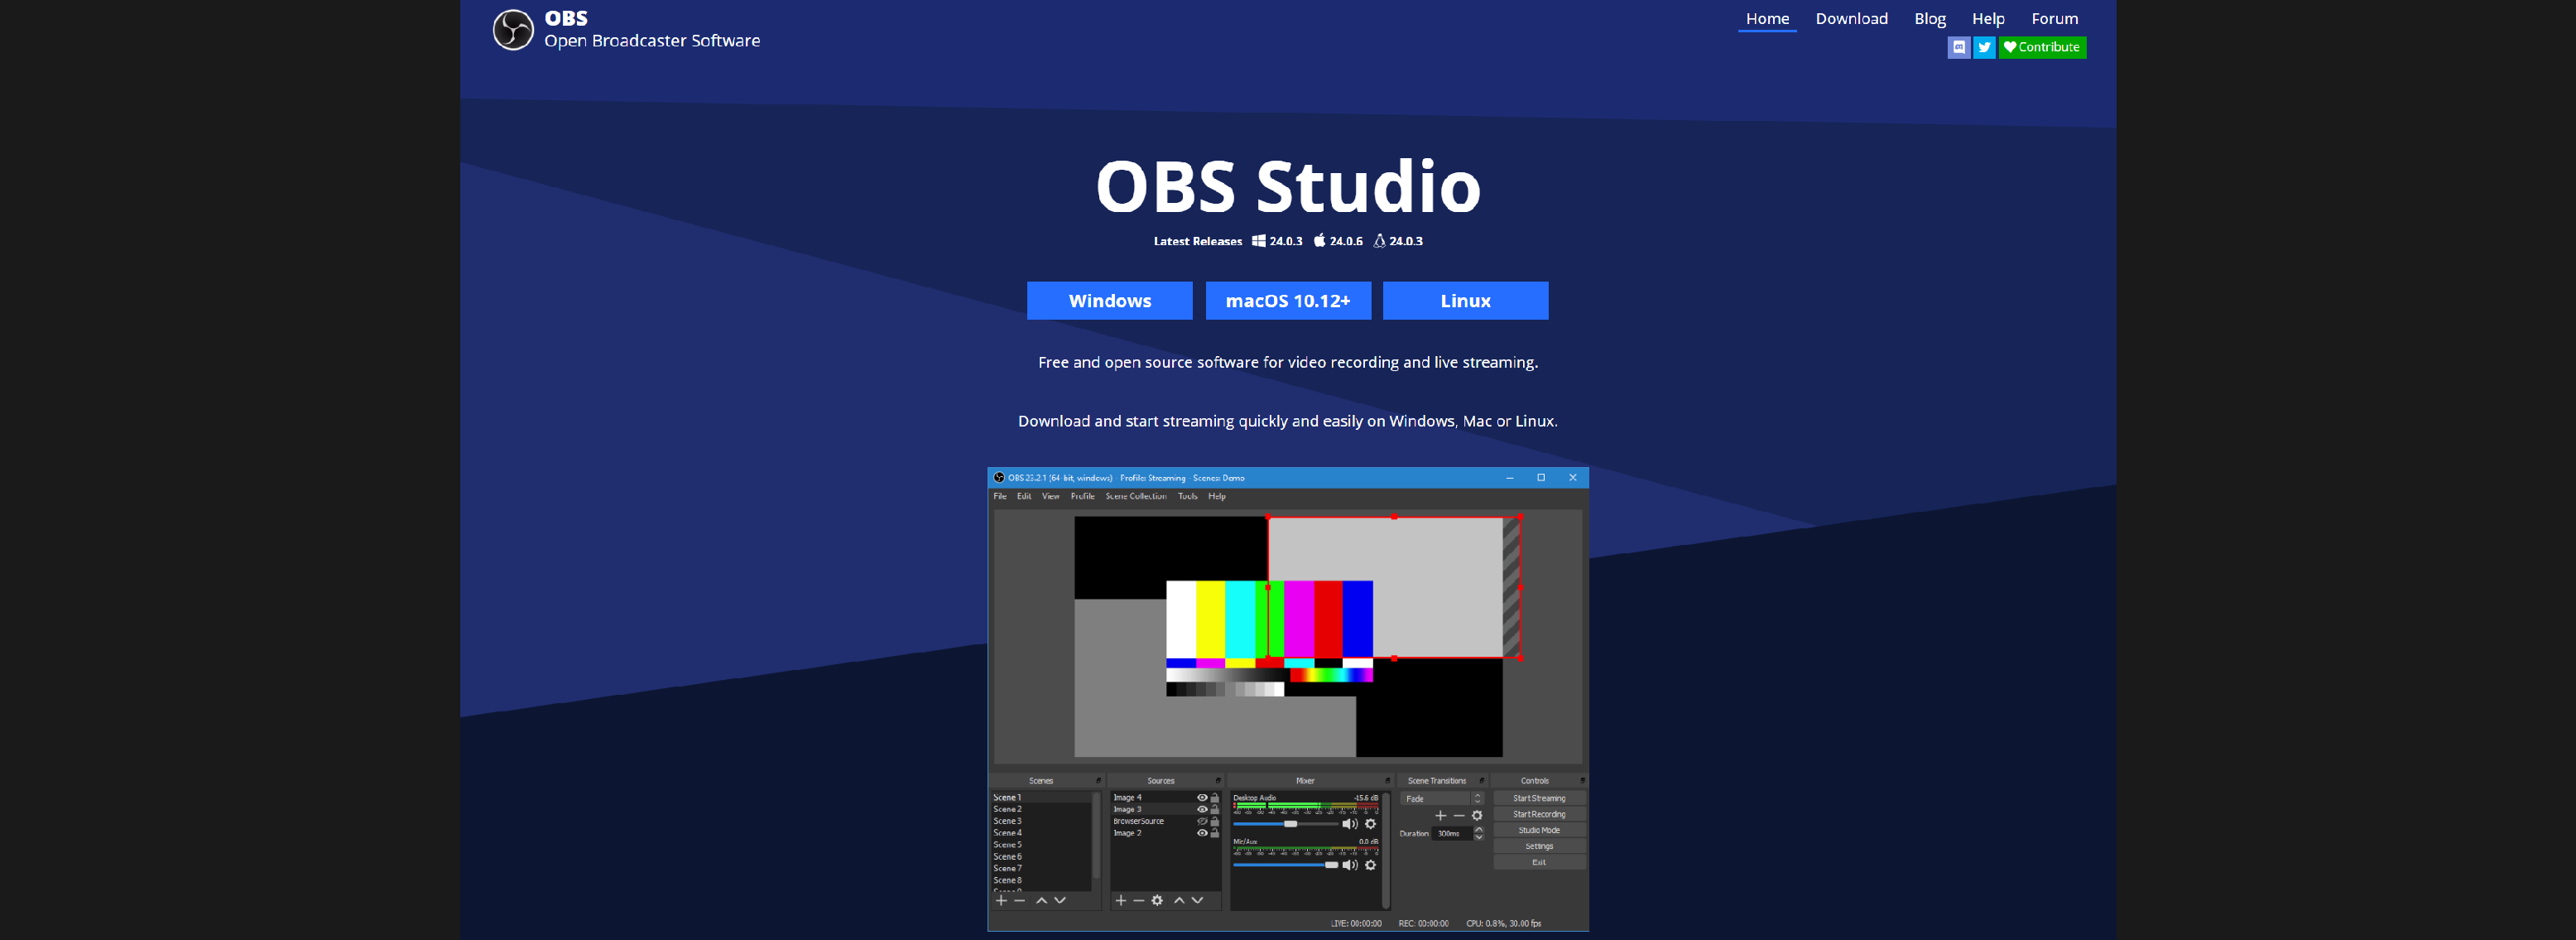 obs studio for windows 7